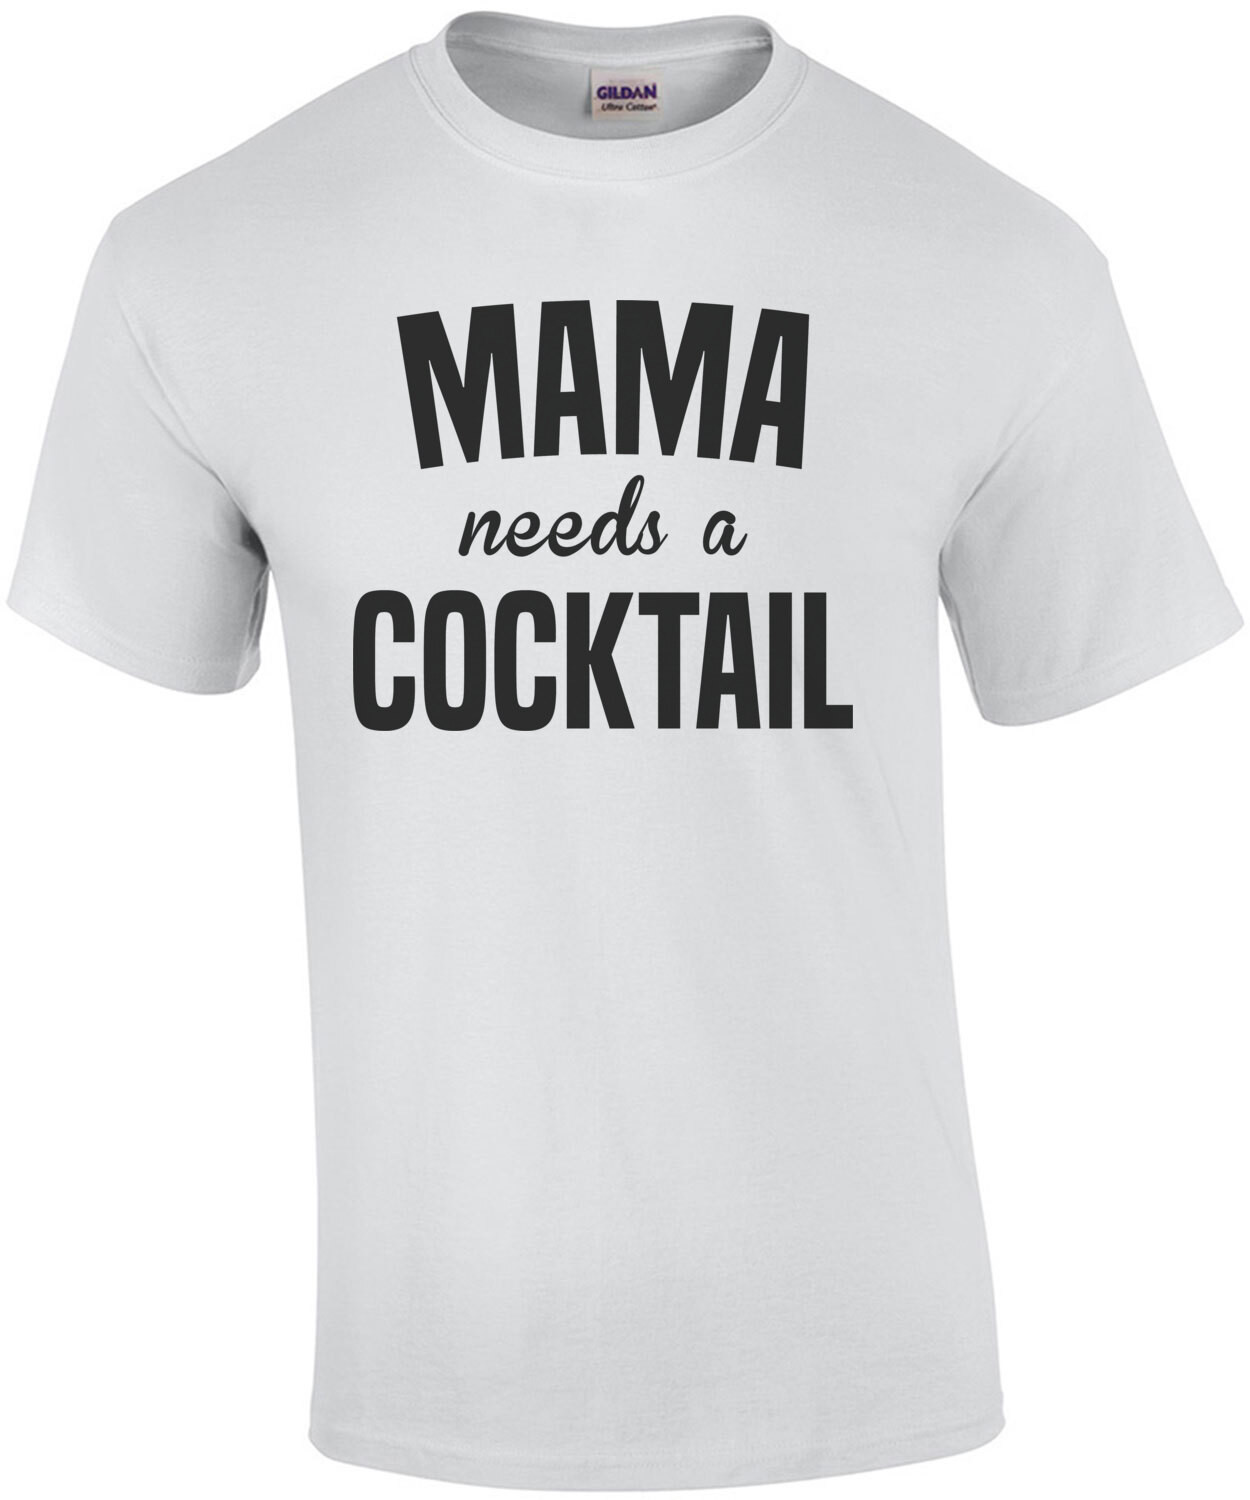 Mama needs a cocktail - funny mom t-shirt